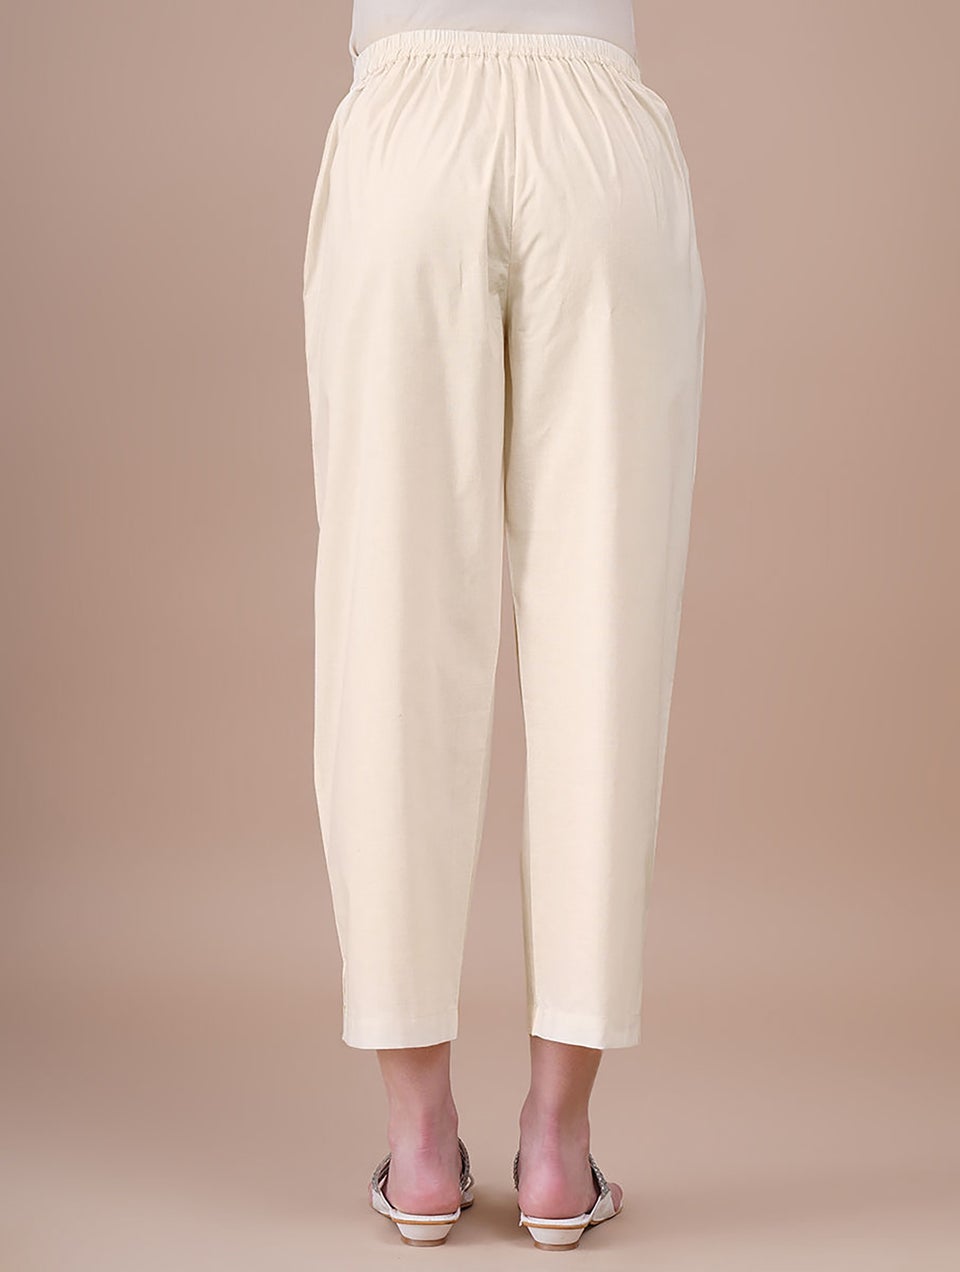 Ivory Elasticated Waist Cotton Pants - XS